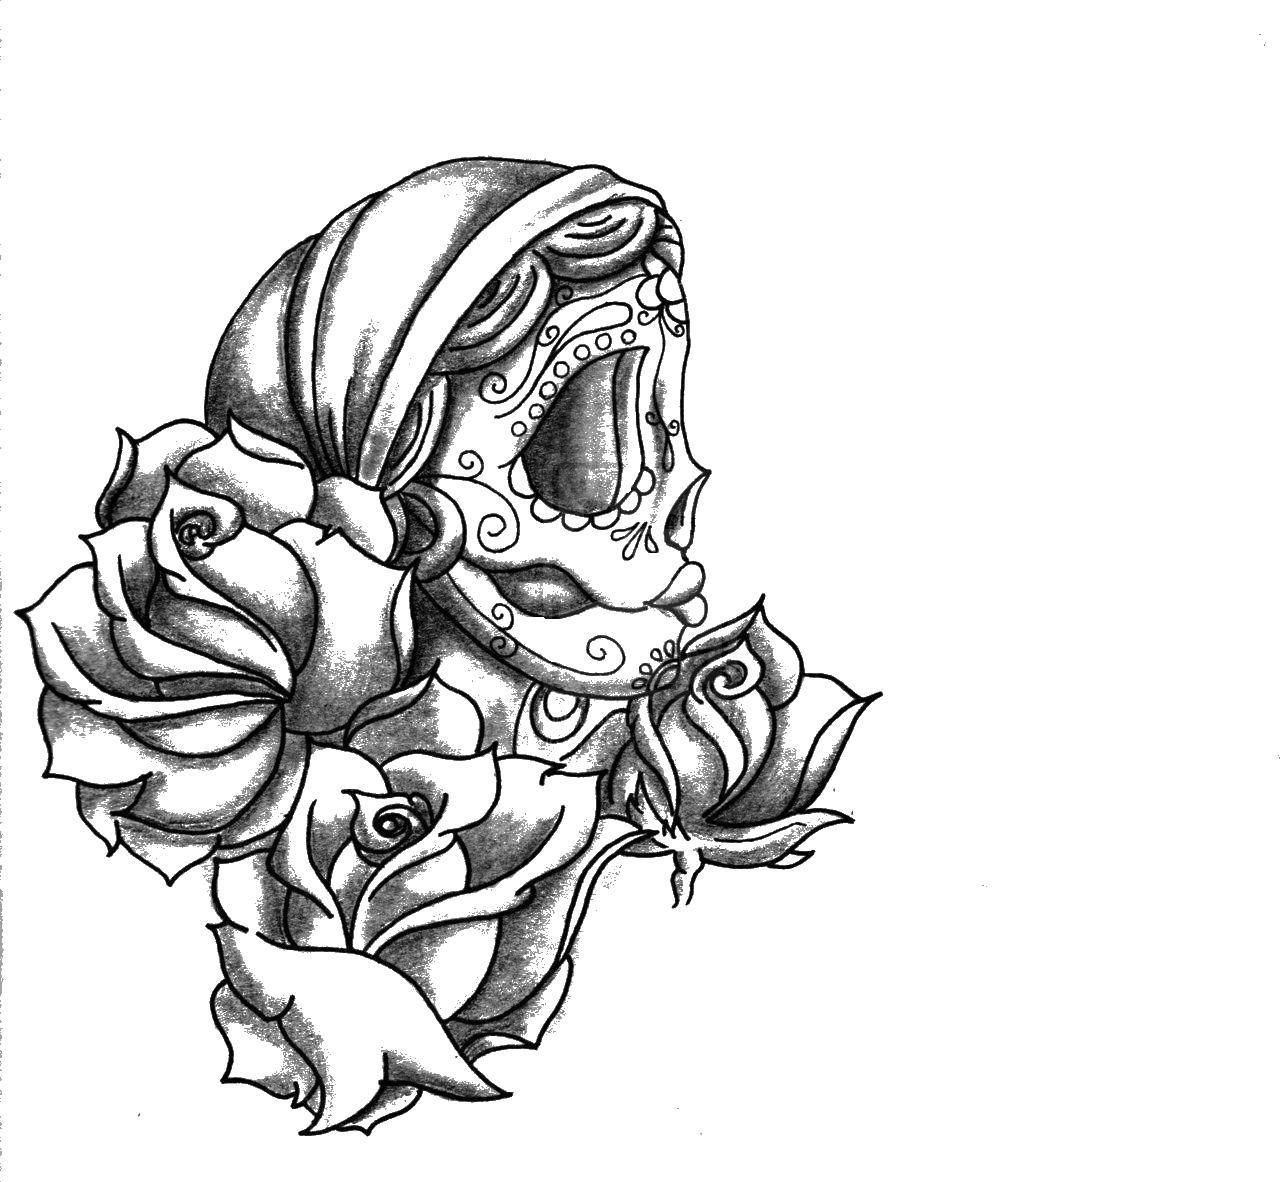 Название: Раскраска Роза череп. Категория: Череп. Теги: череп, роза.